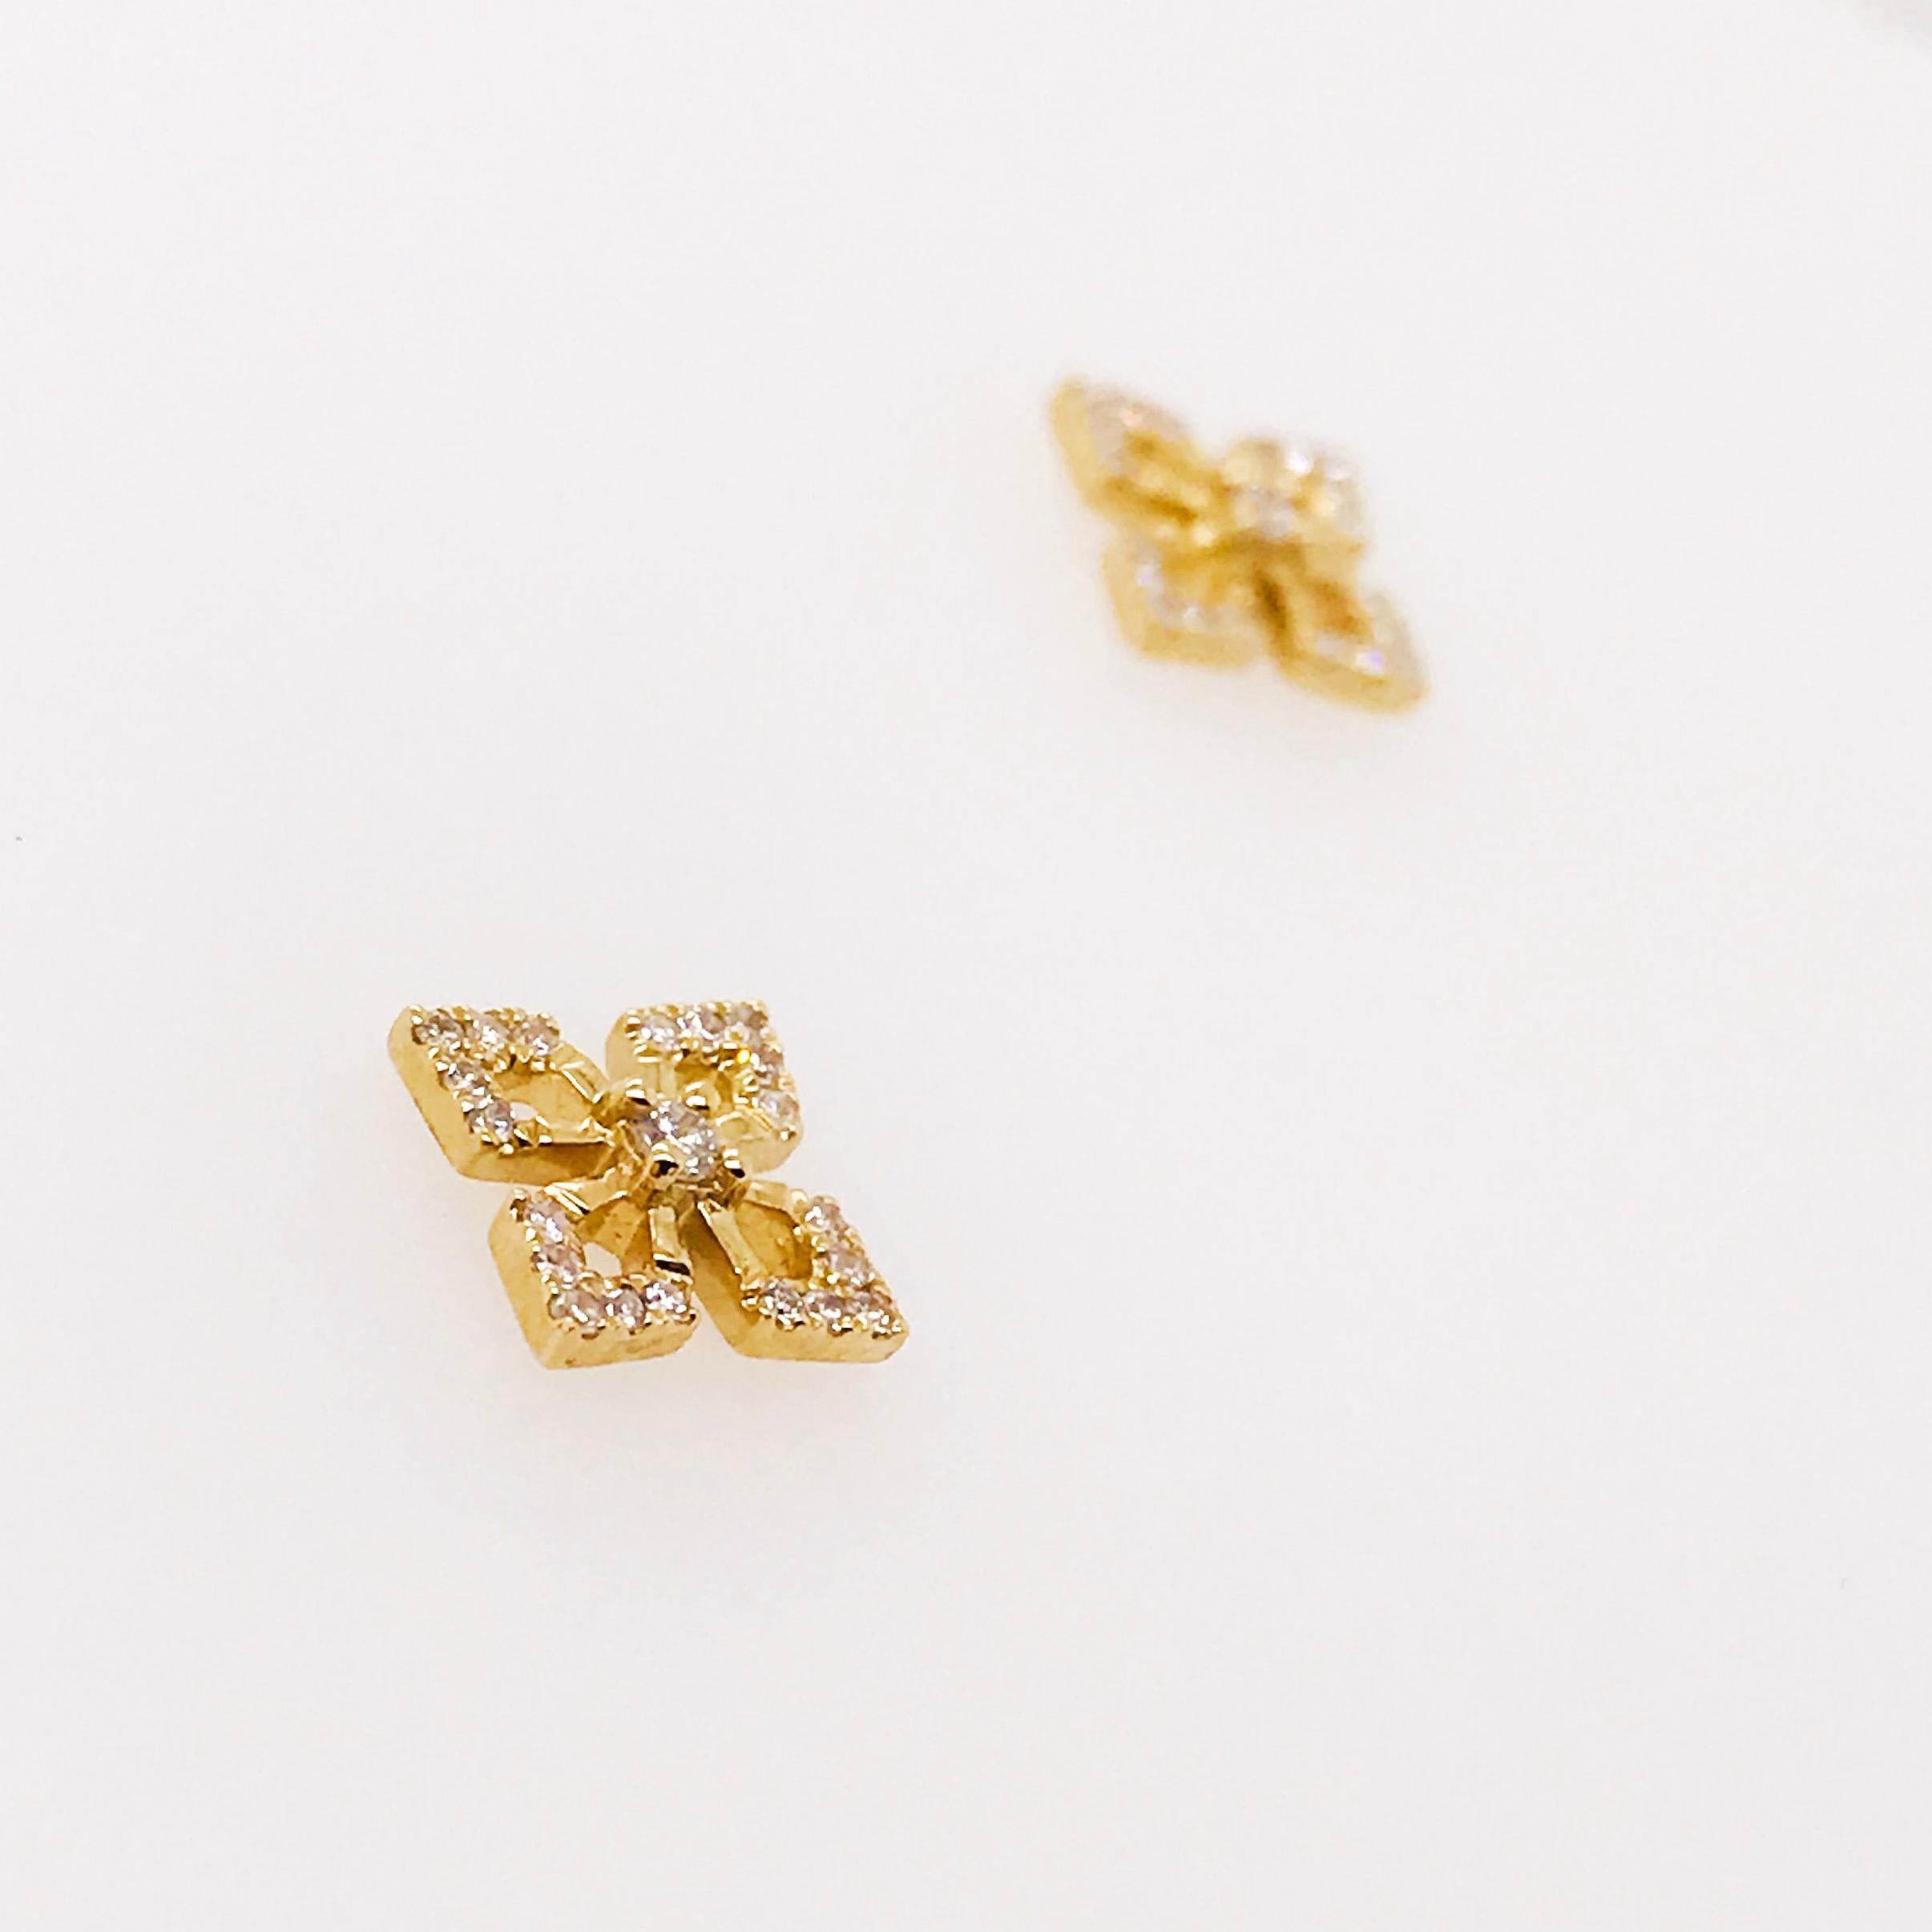 0.12 Carat Diamond Petal Clover Earring Studs in 14 Karat Yellow Gold 2